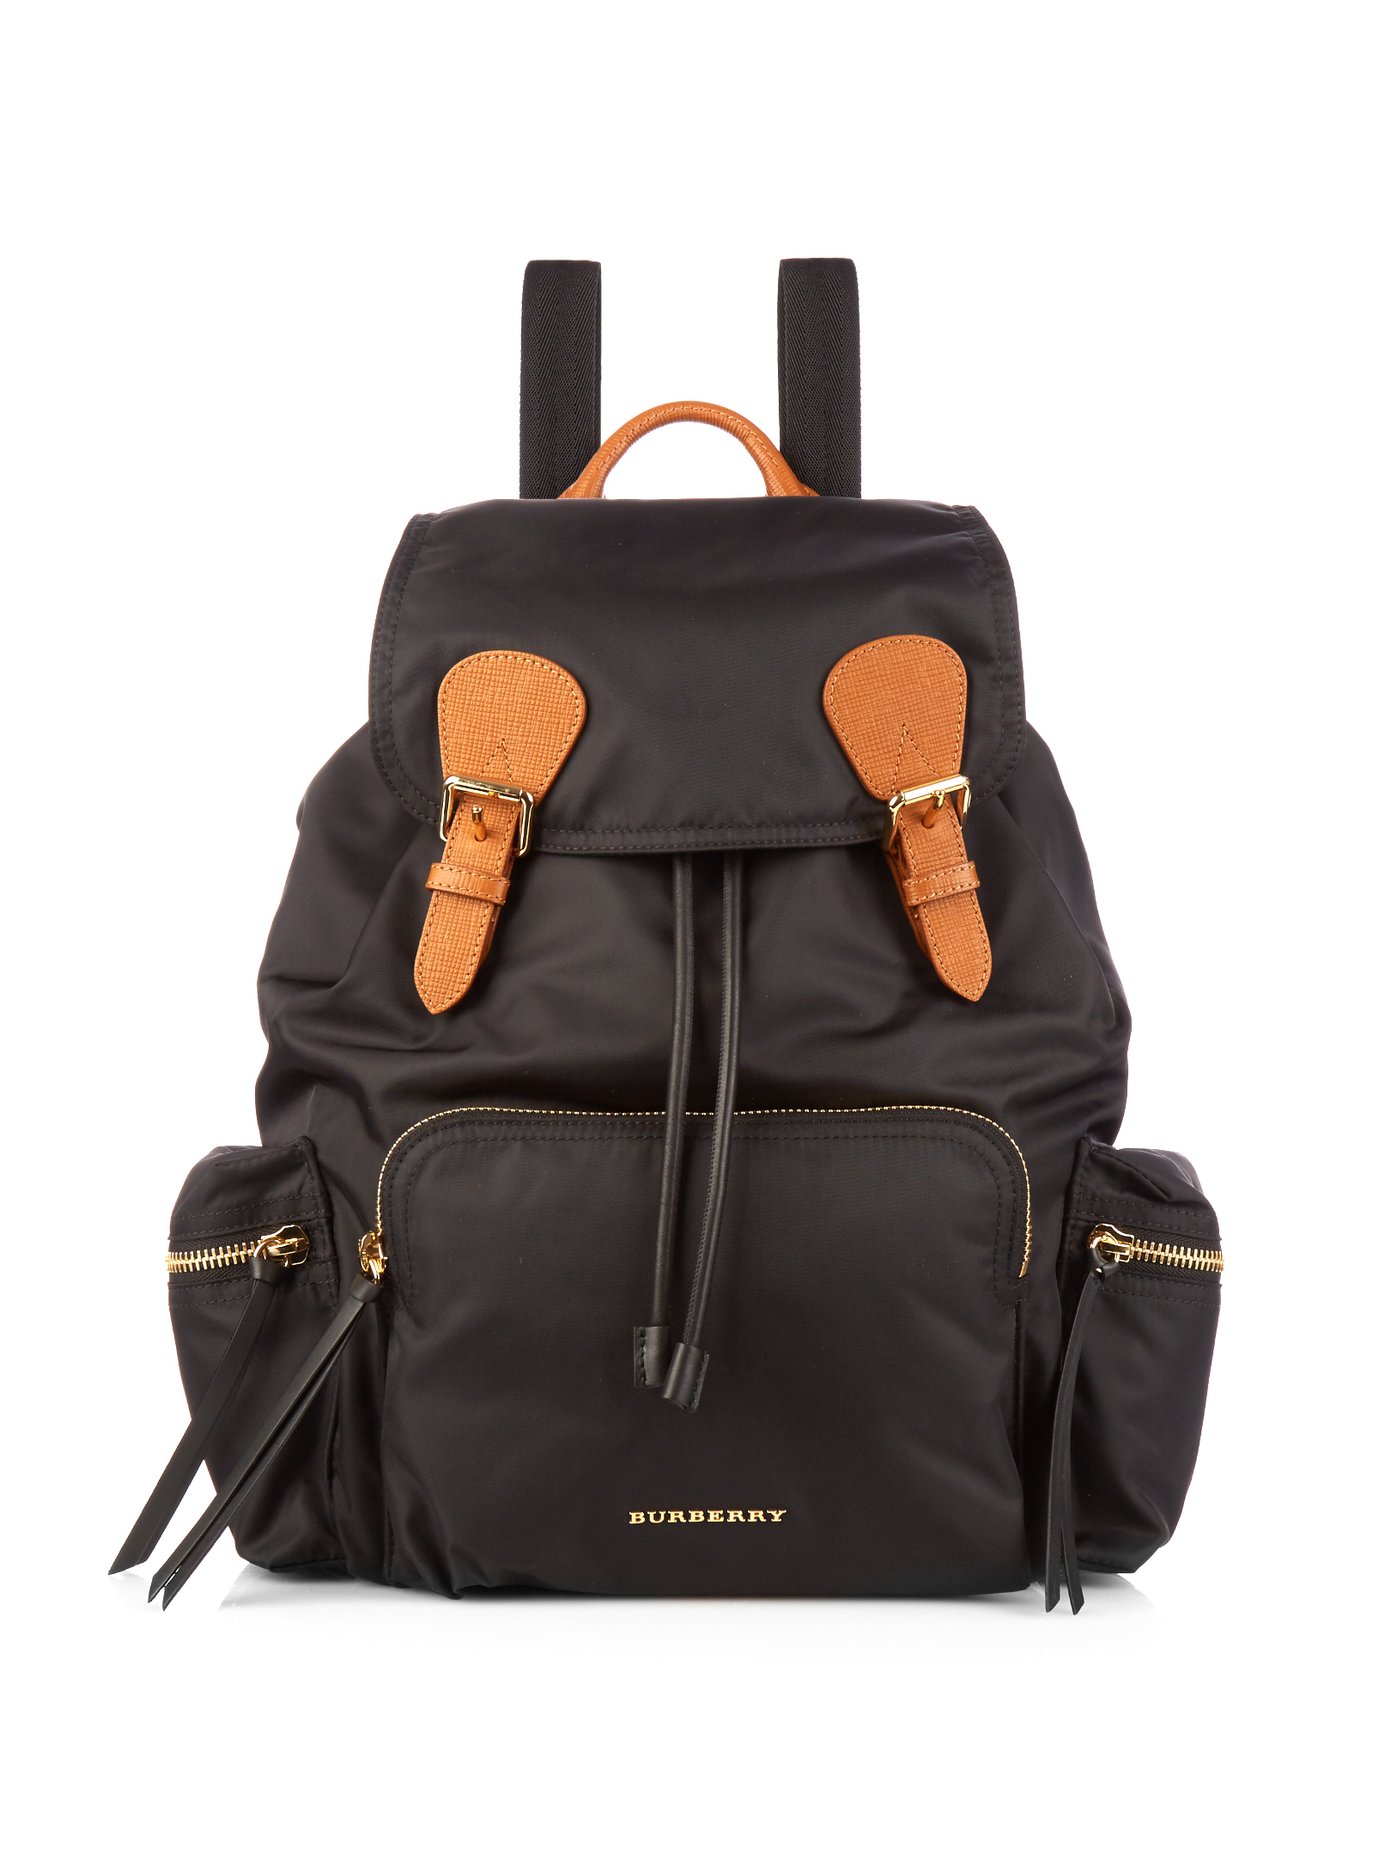 burberry prorsum nylon backpack